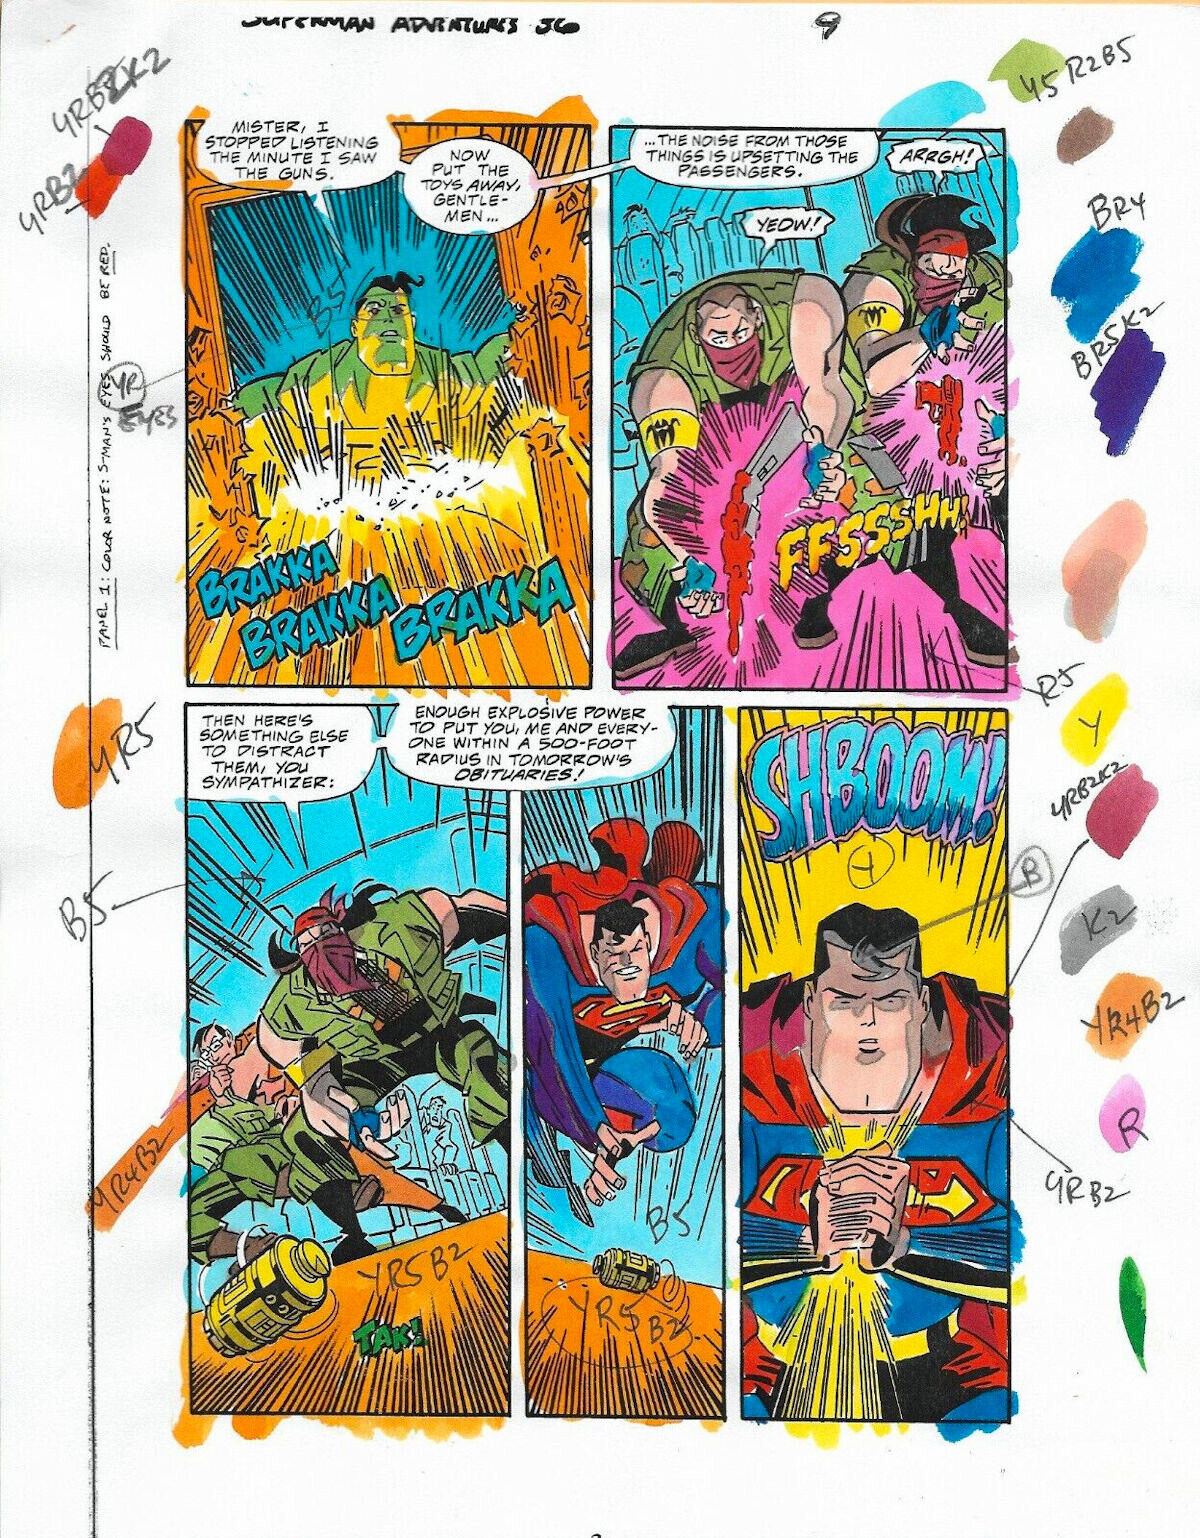 Original 1999 Superman Adventures 36 color guide comic book art page 9,DC Comics